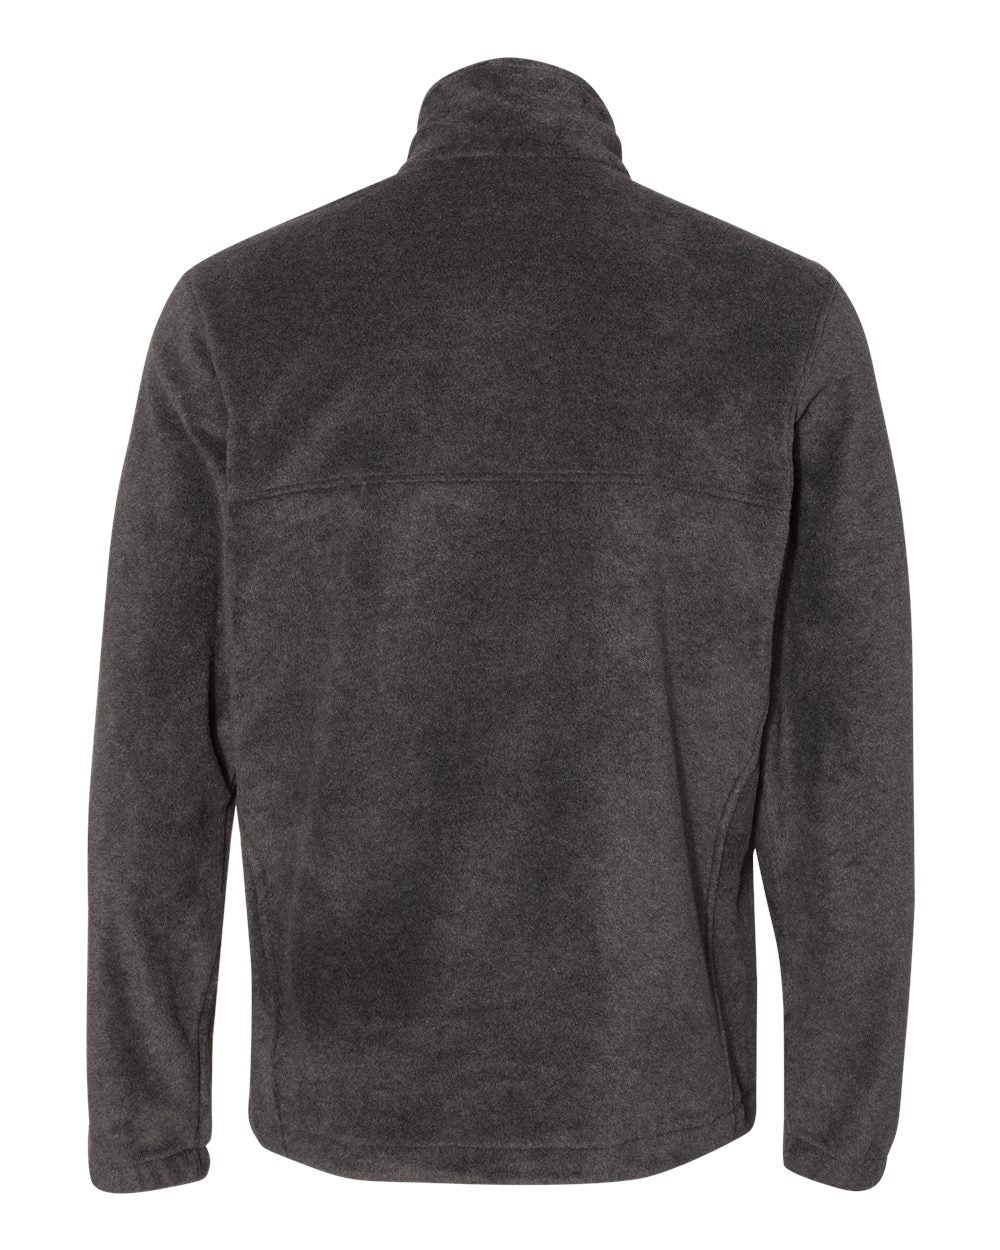 Columbia Steens Mountain™ Fleece 2.0 Full-Zip Jacket 147667 #color_Charcoal Heather